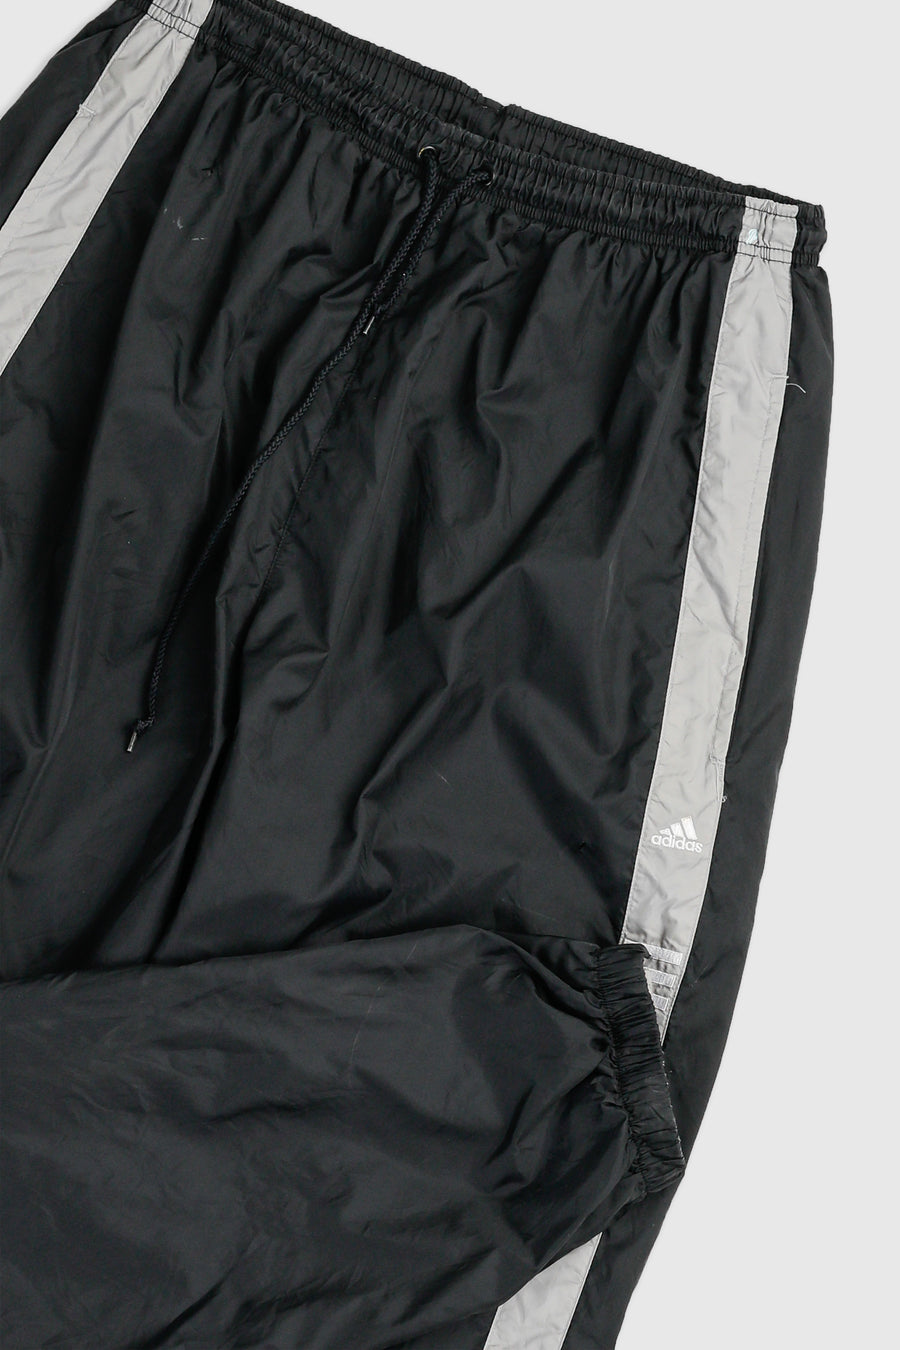 Vintage Adidas Windbreaker Pants - XL